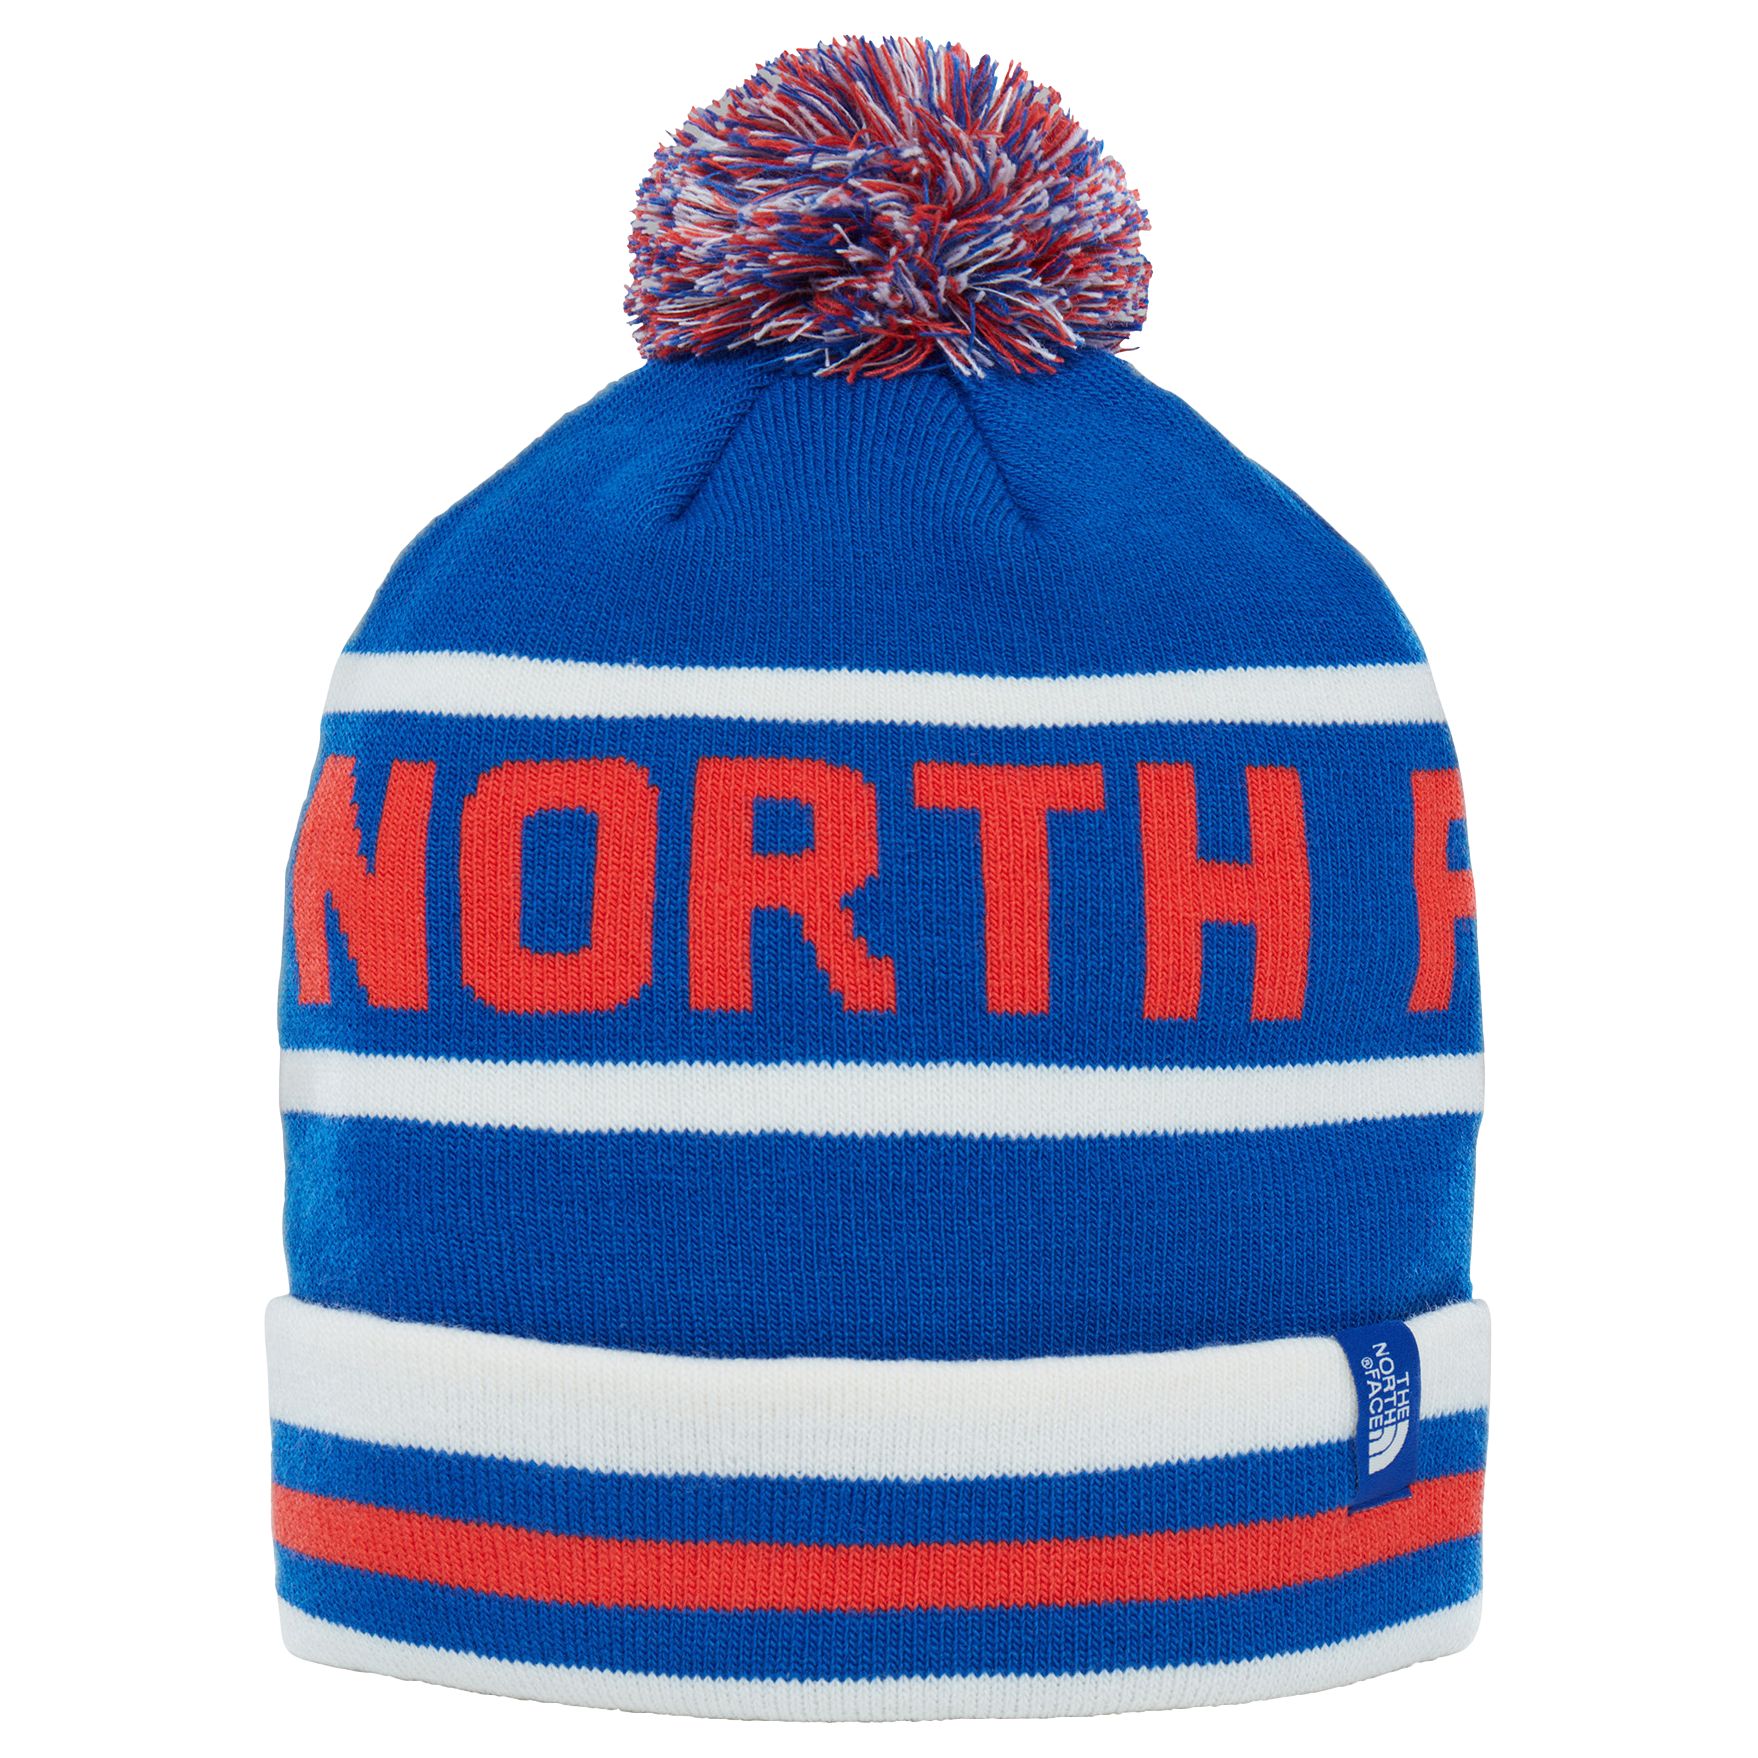 bobble hat north face